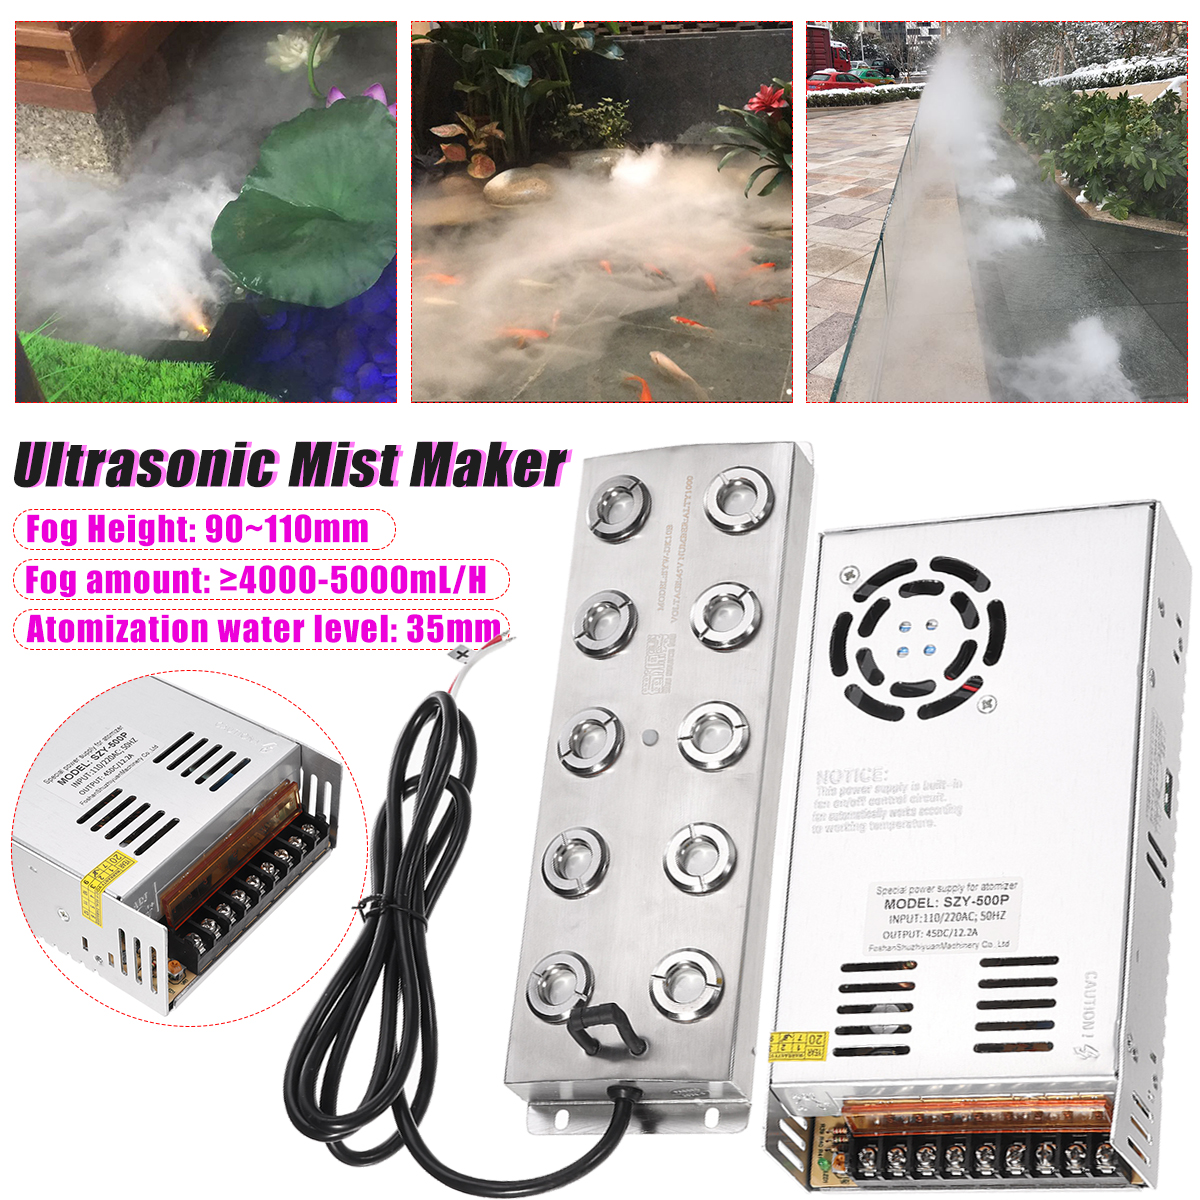 5000mLH-10-Head-Ultrasonic-Mist-Maker-Fogger-Humidifier-Greenhouse-Aeromist-Hydroponics-with-Switchi-1781002-1